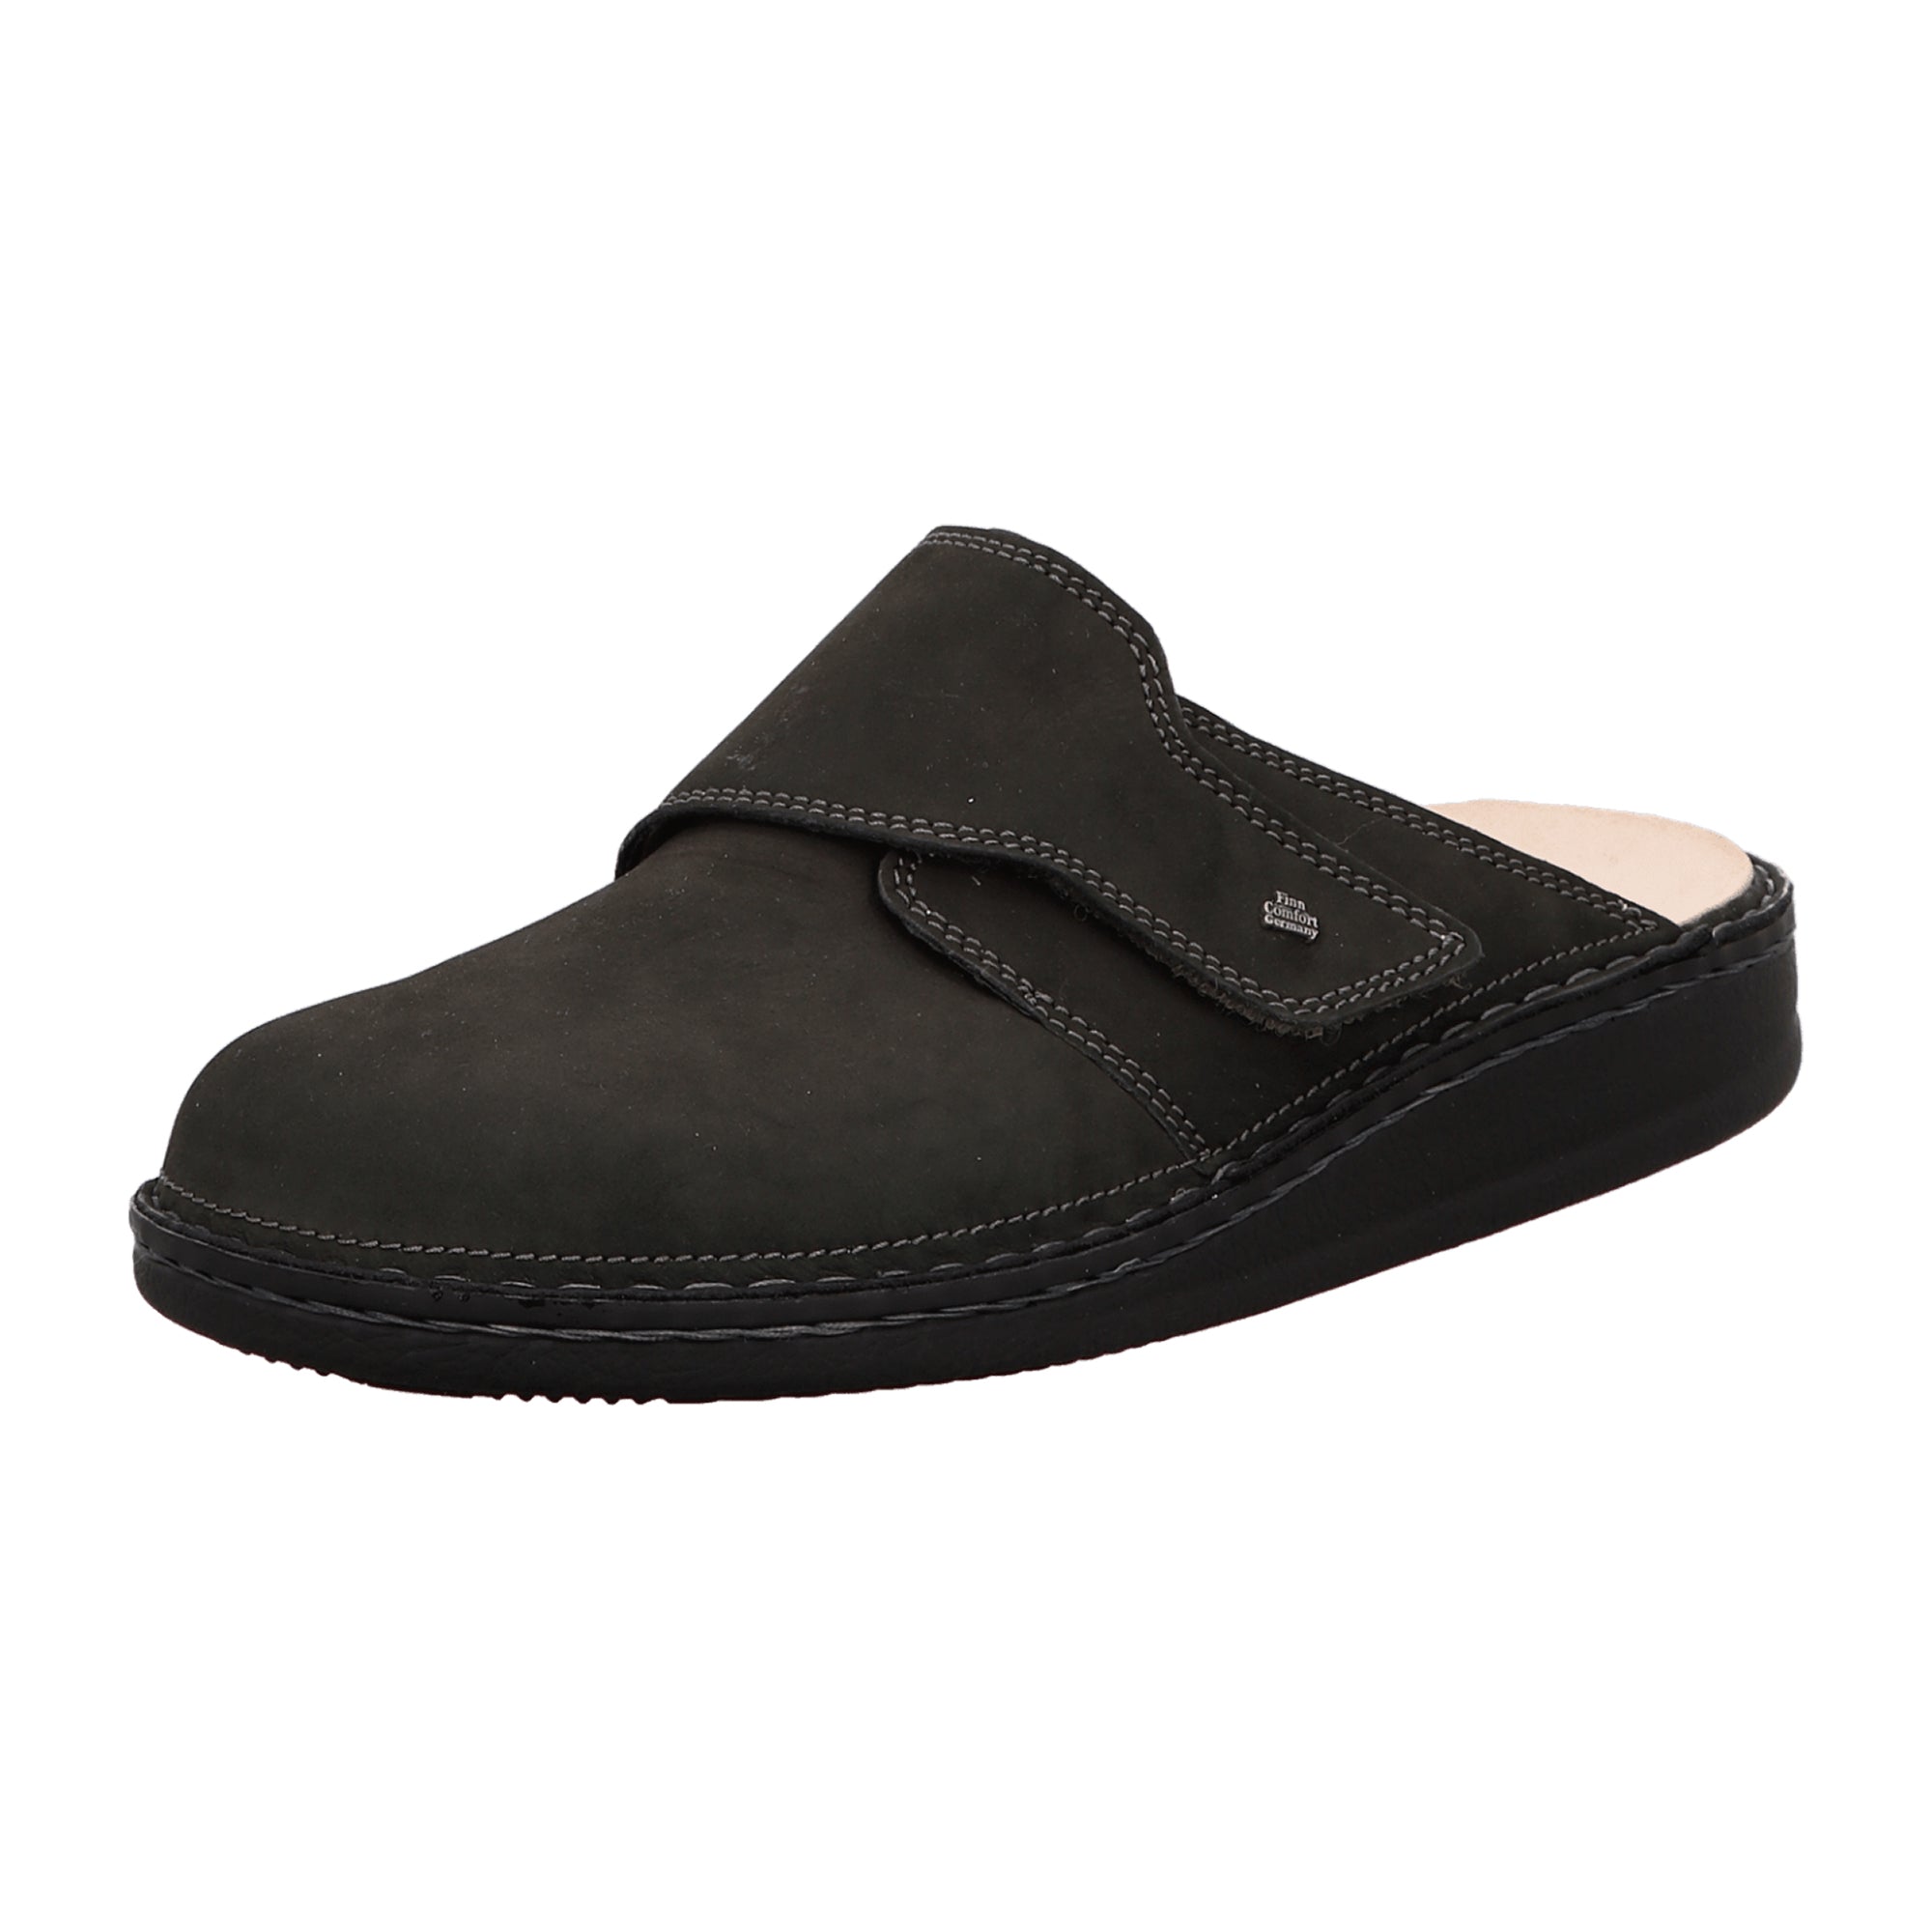 Finn Comfort Men's Comfort Sandals - Durable & Stylish Black Design